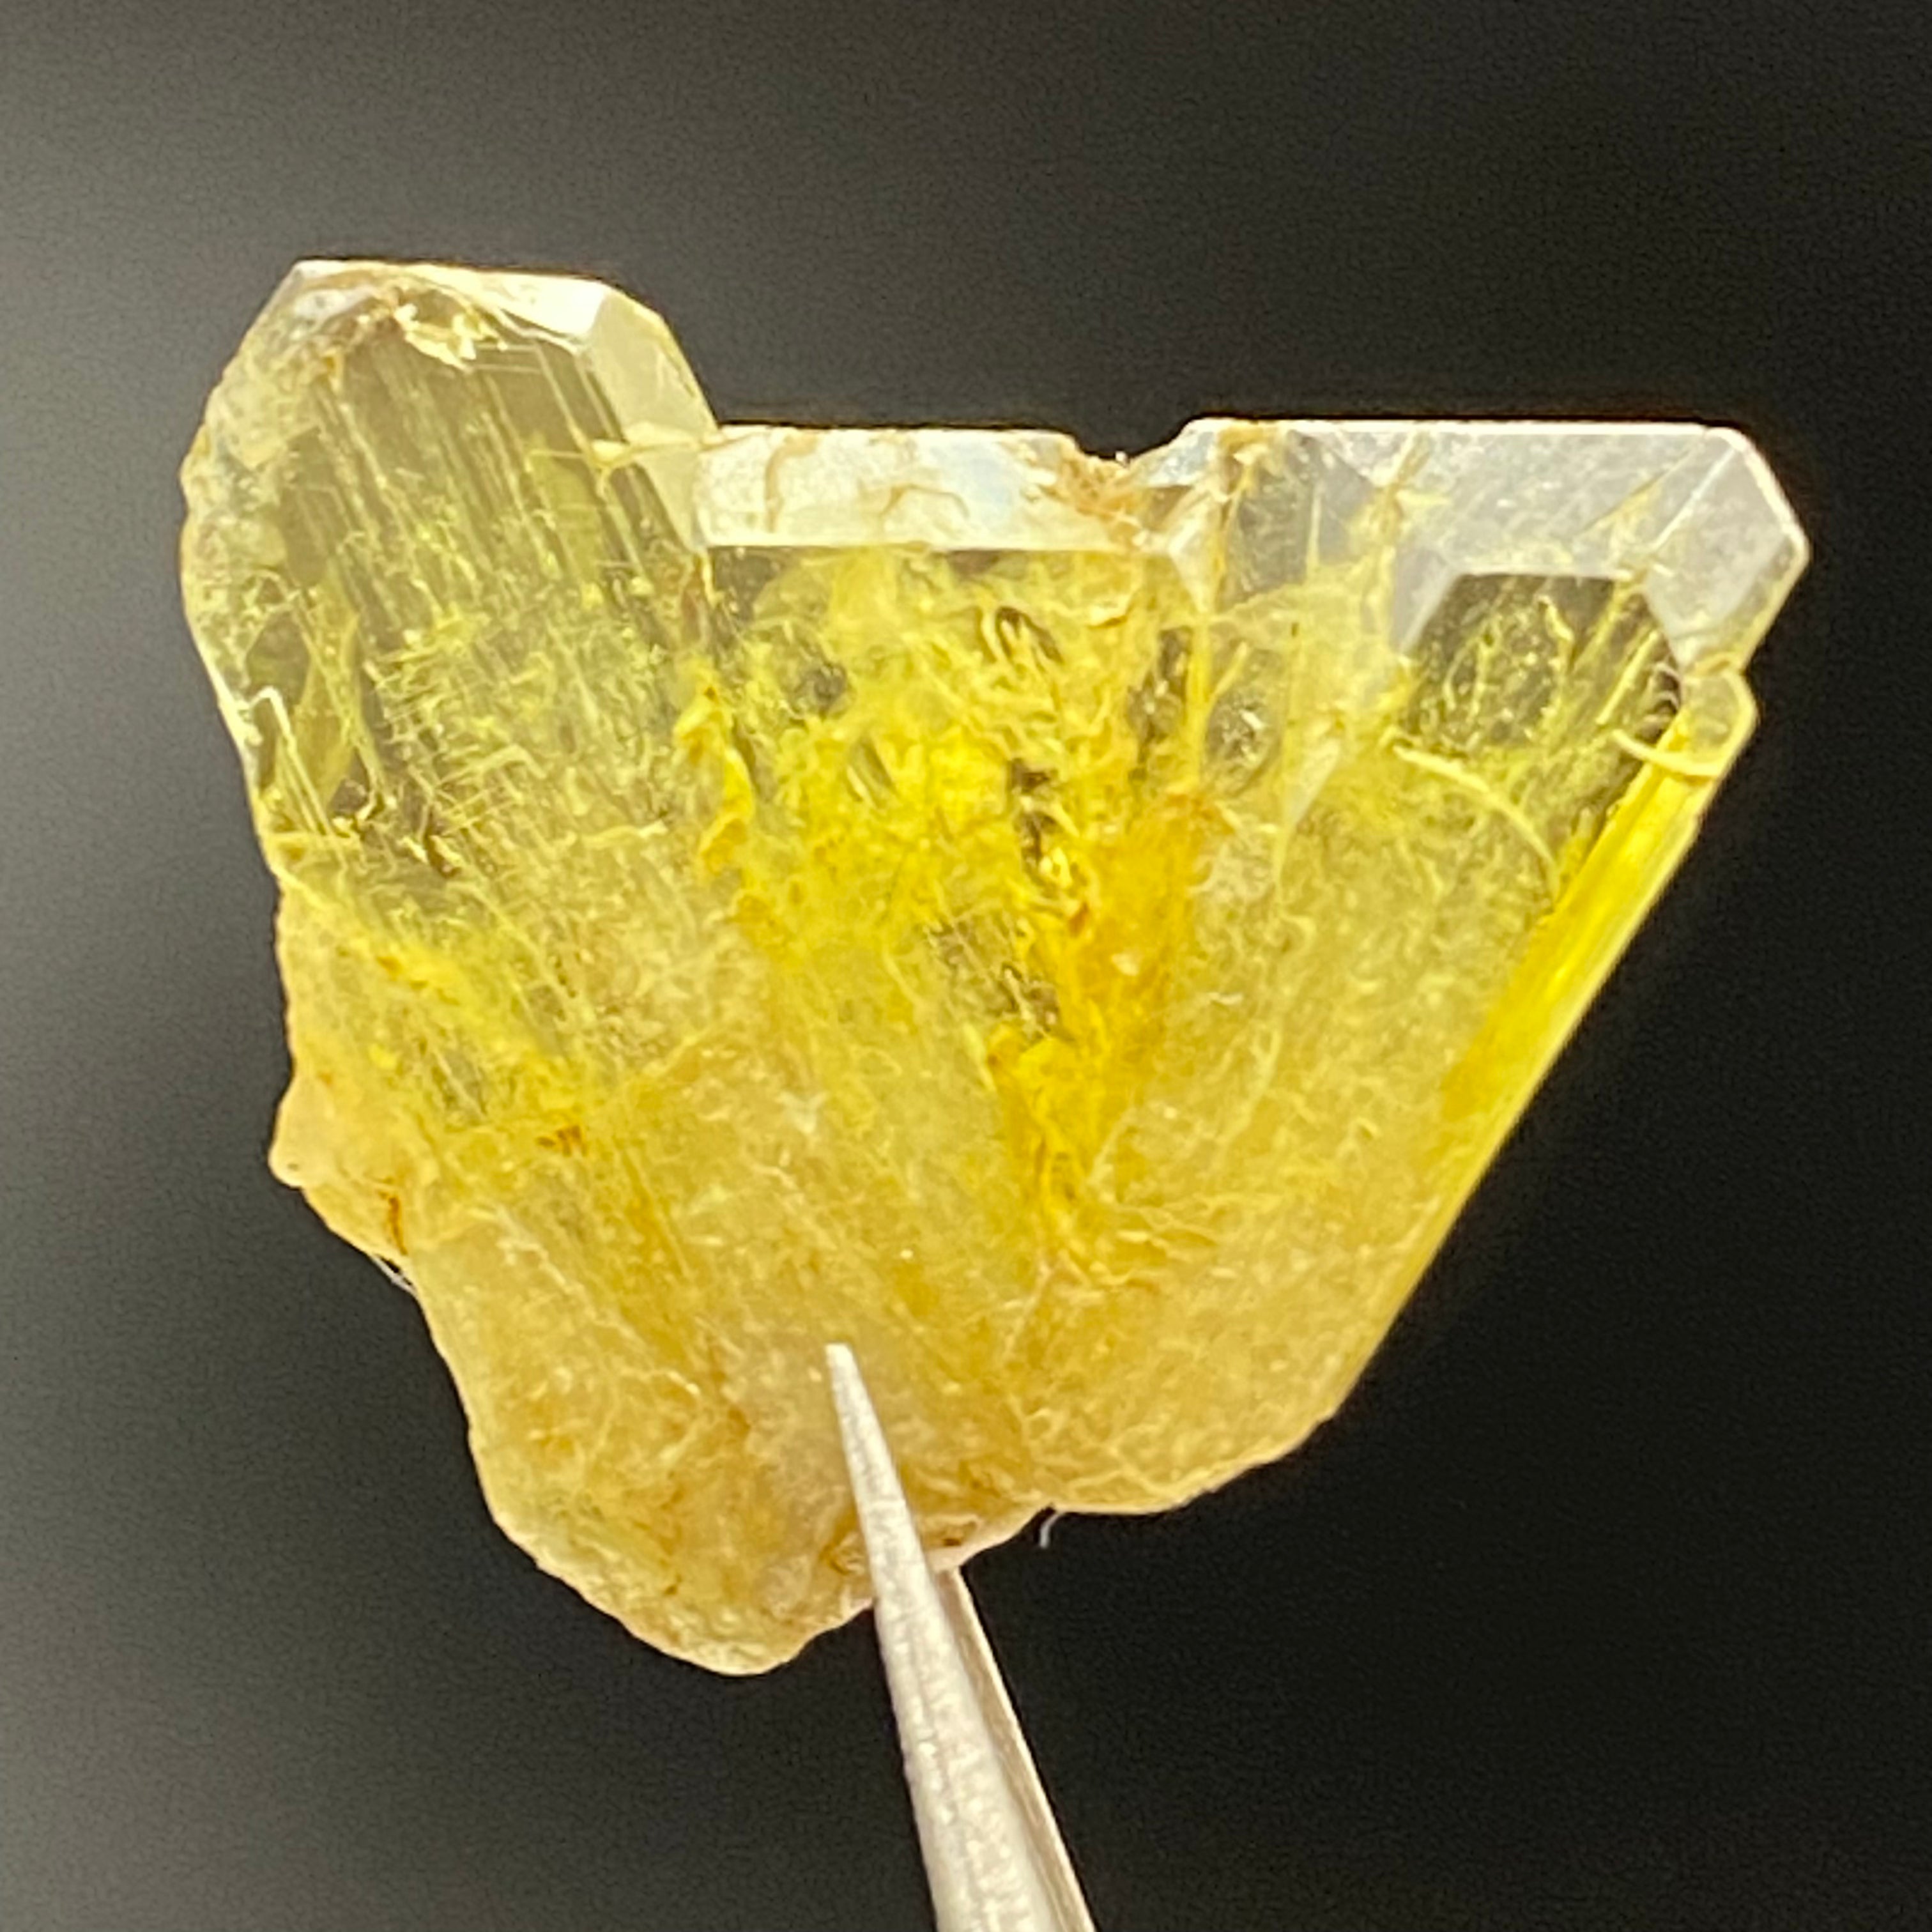 Chrysoberyl Crystal - 165